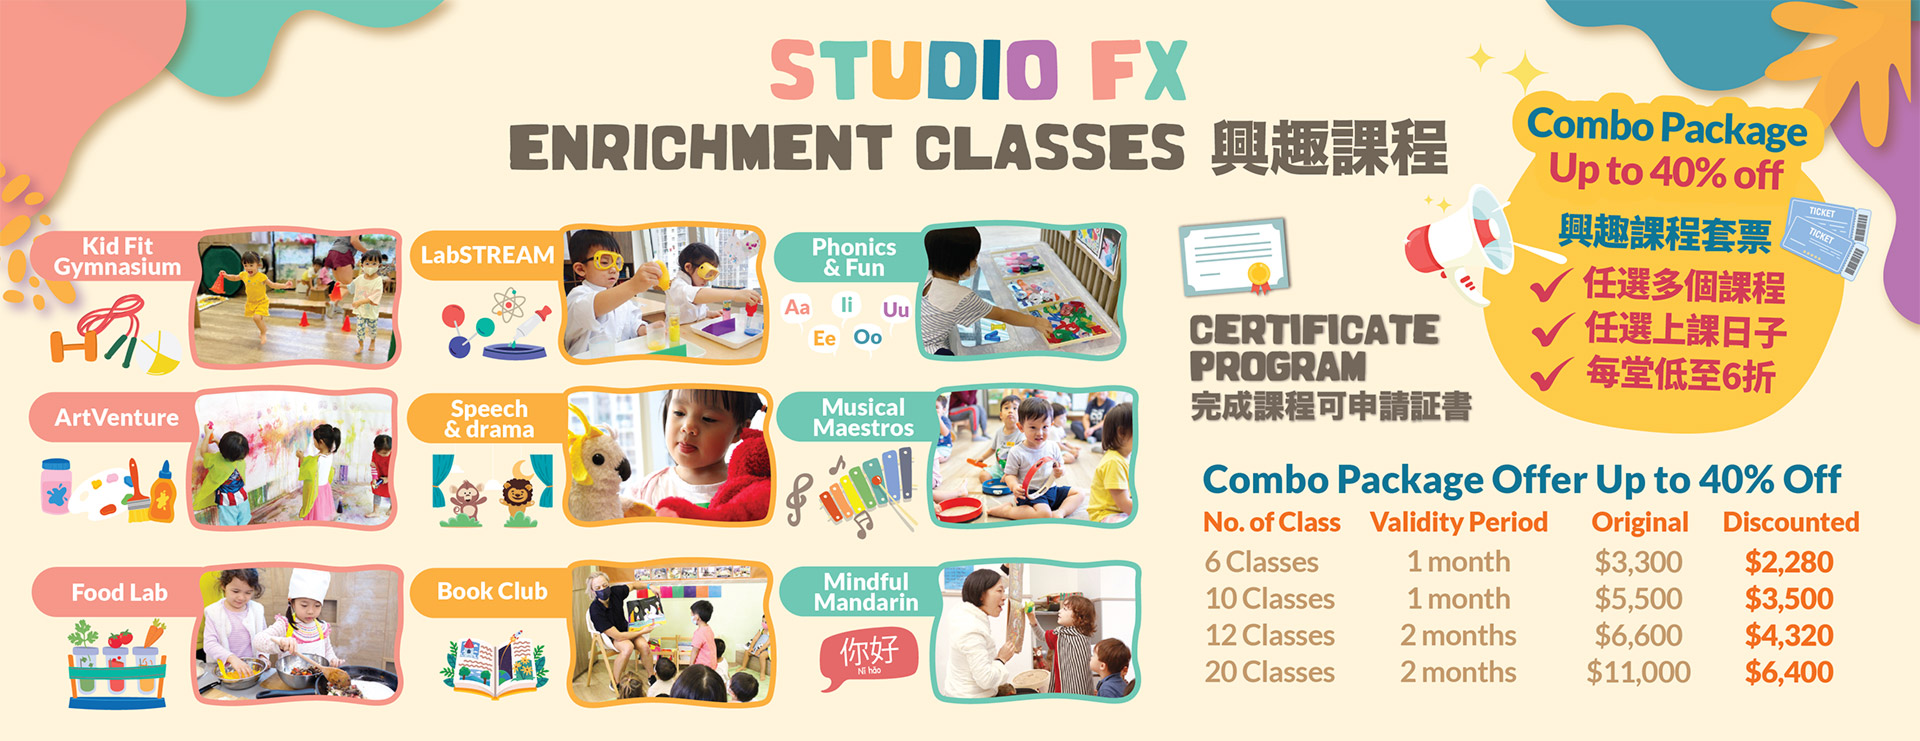 Studio FX Enrichment Program